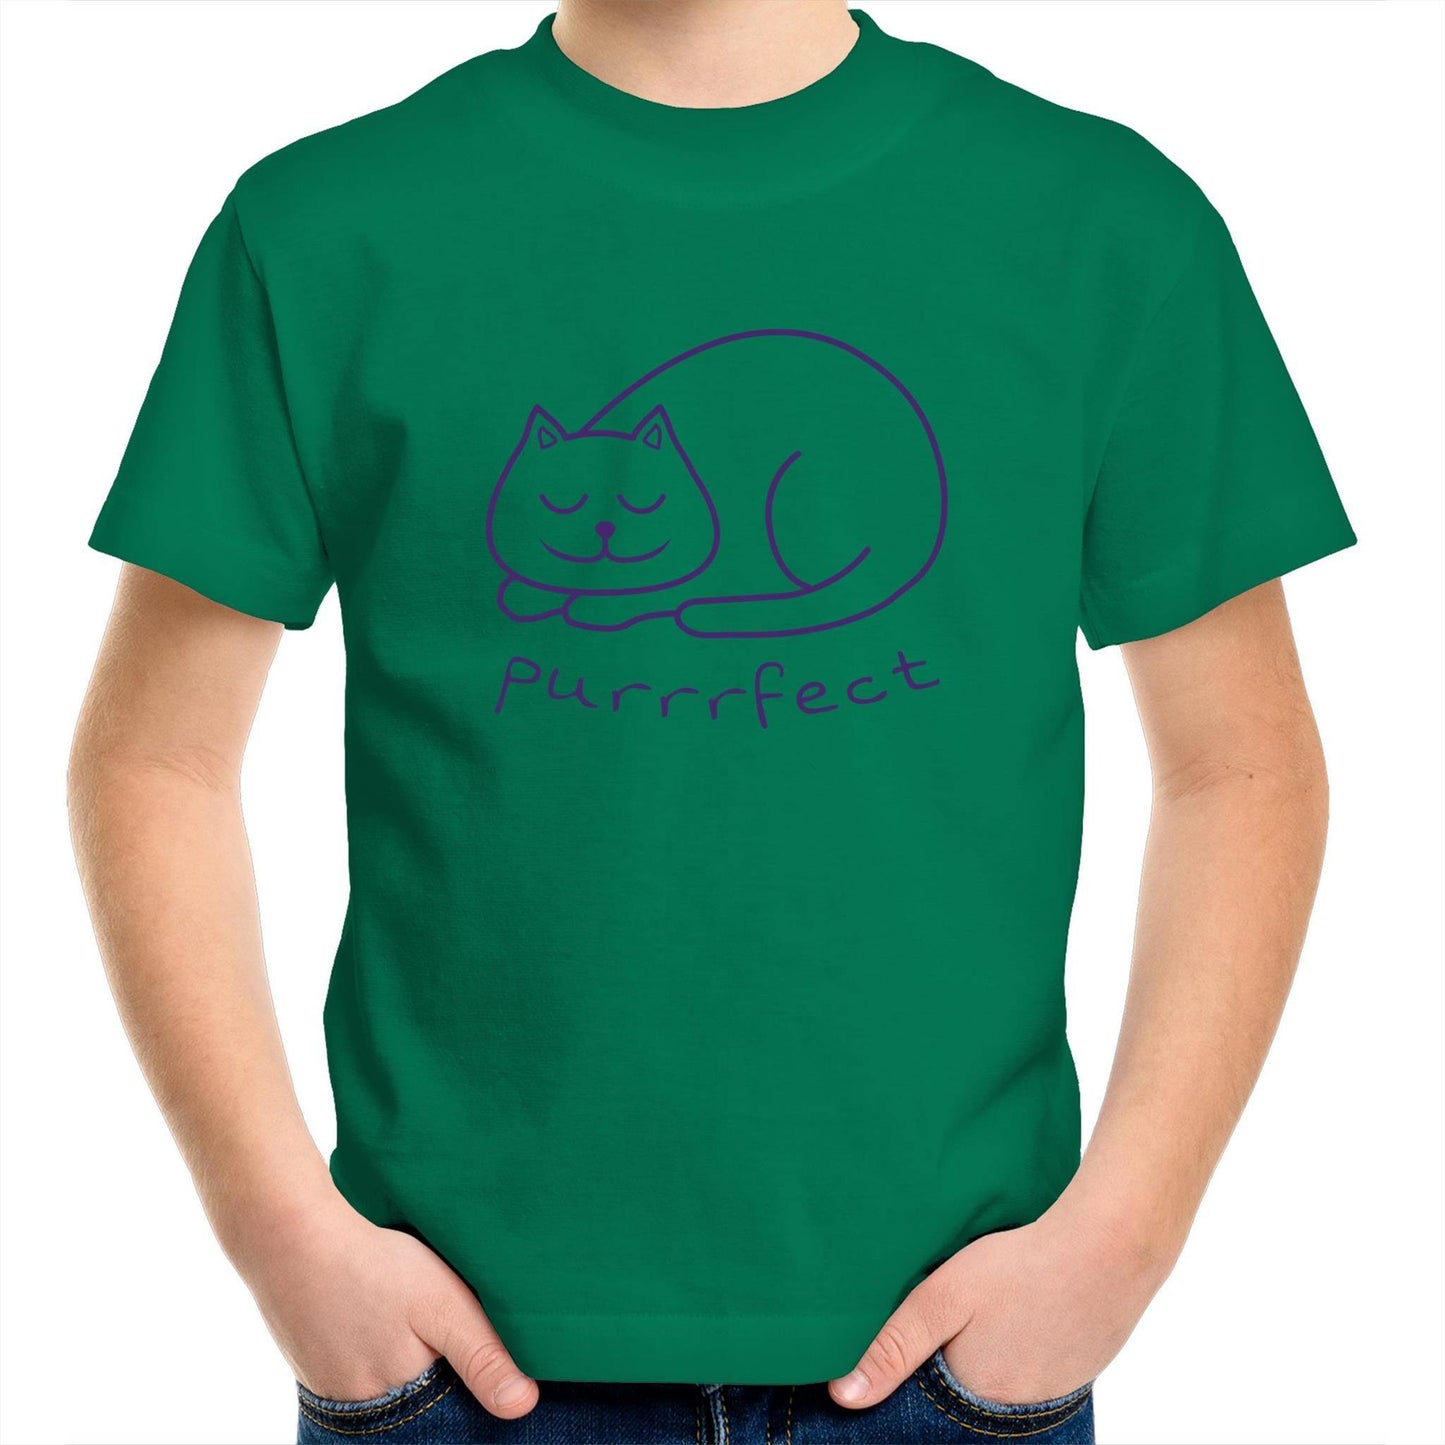 Purrrfect - Kids Youth Crew T-Shirt Kelly Green Kids Youth T-shirt animal